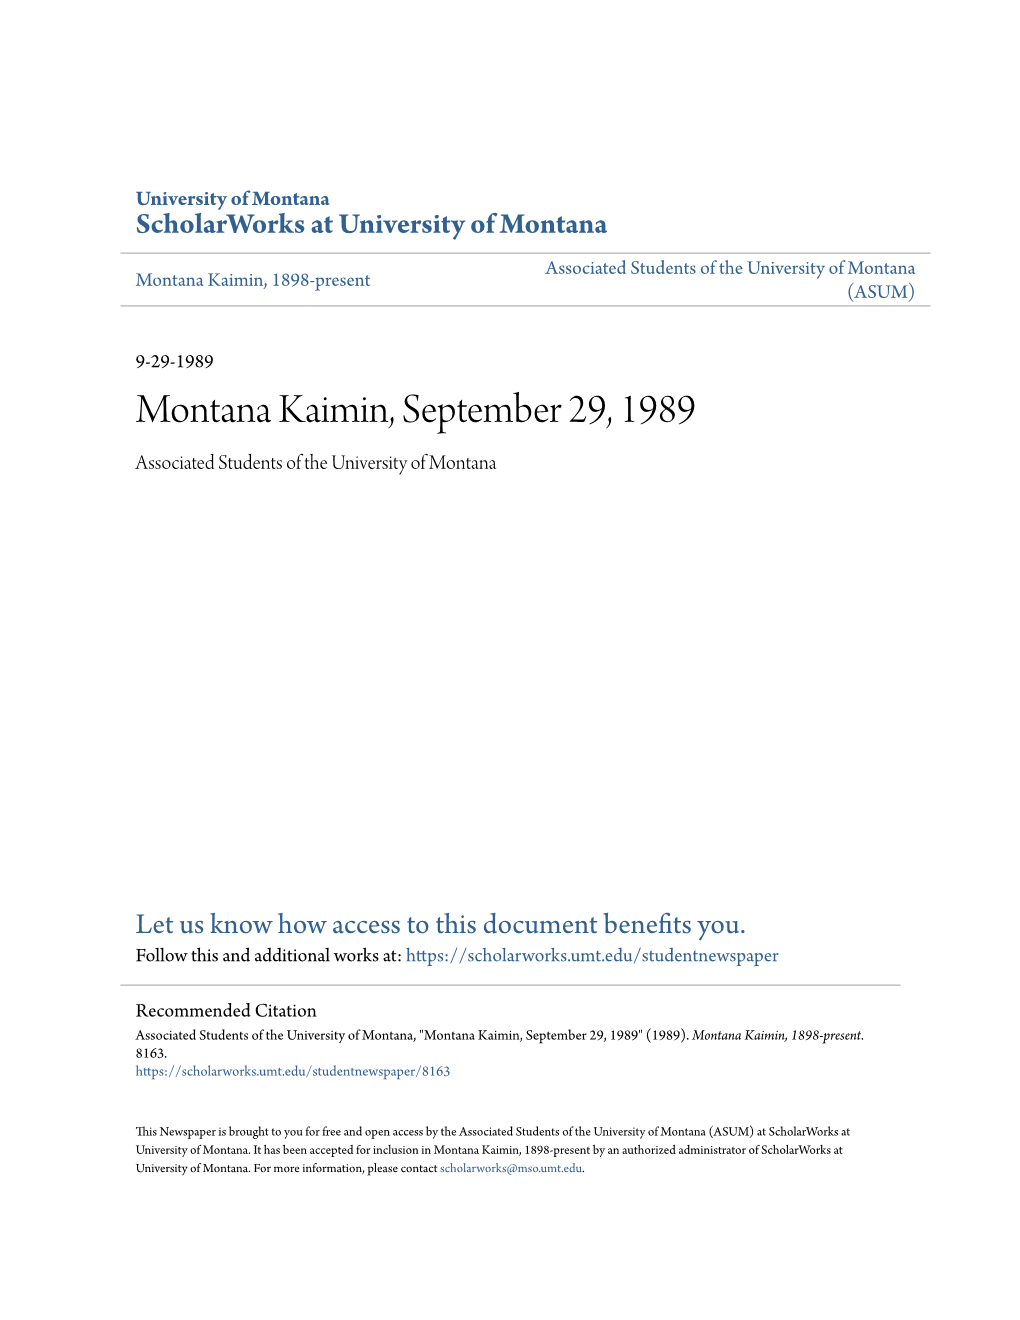 Montana Kaimin, September 29, 1989 Associated Students of the University of Montana